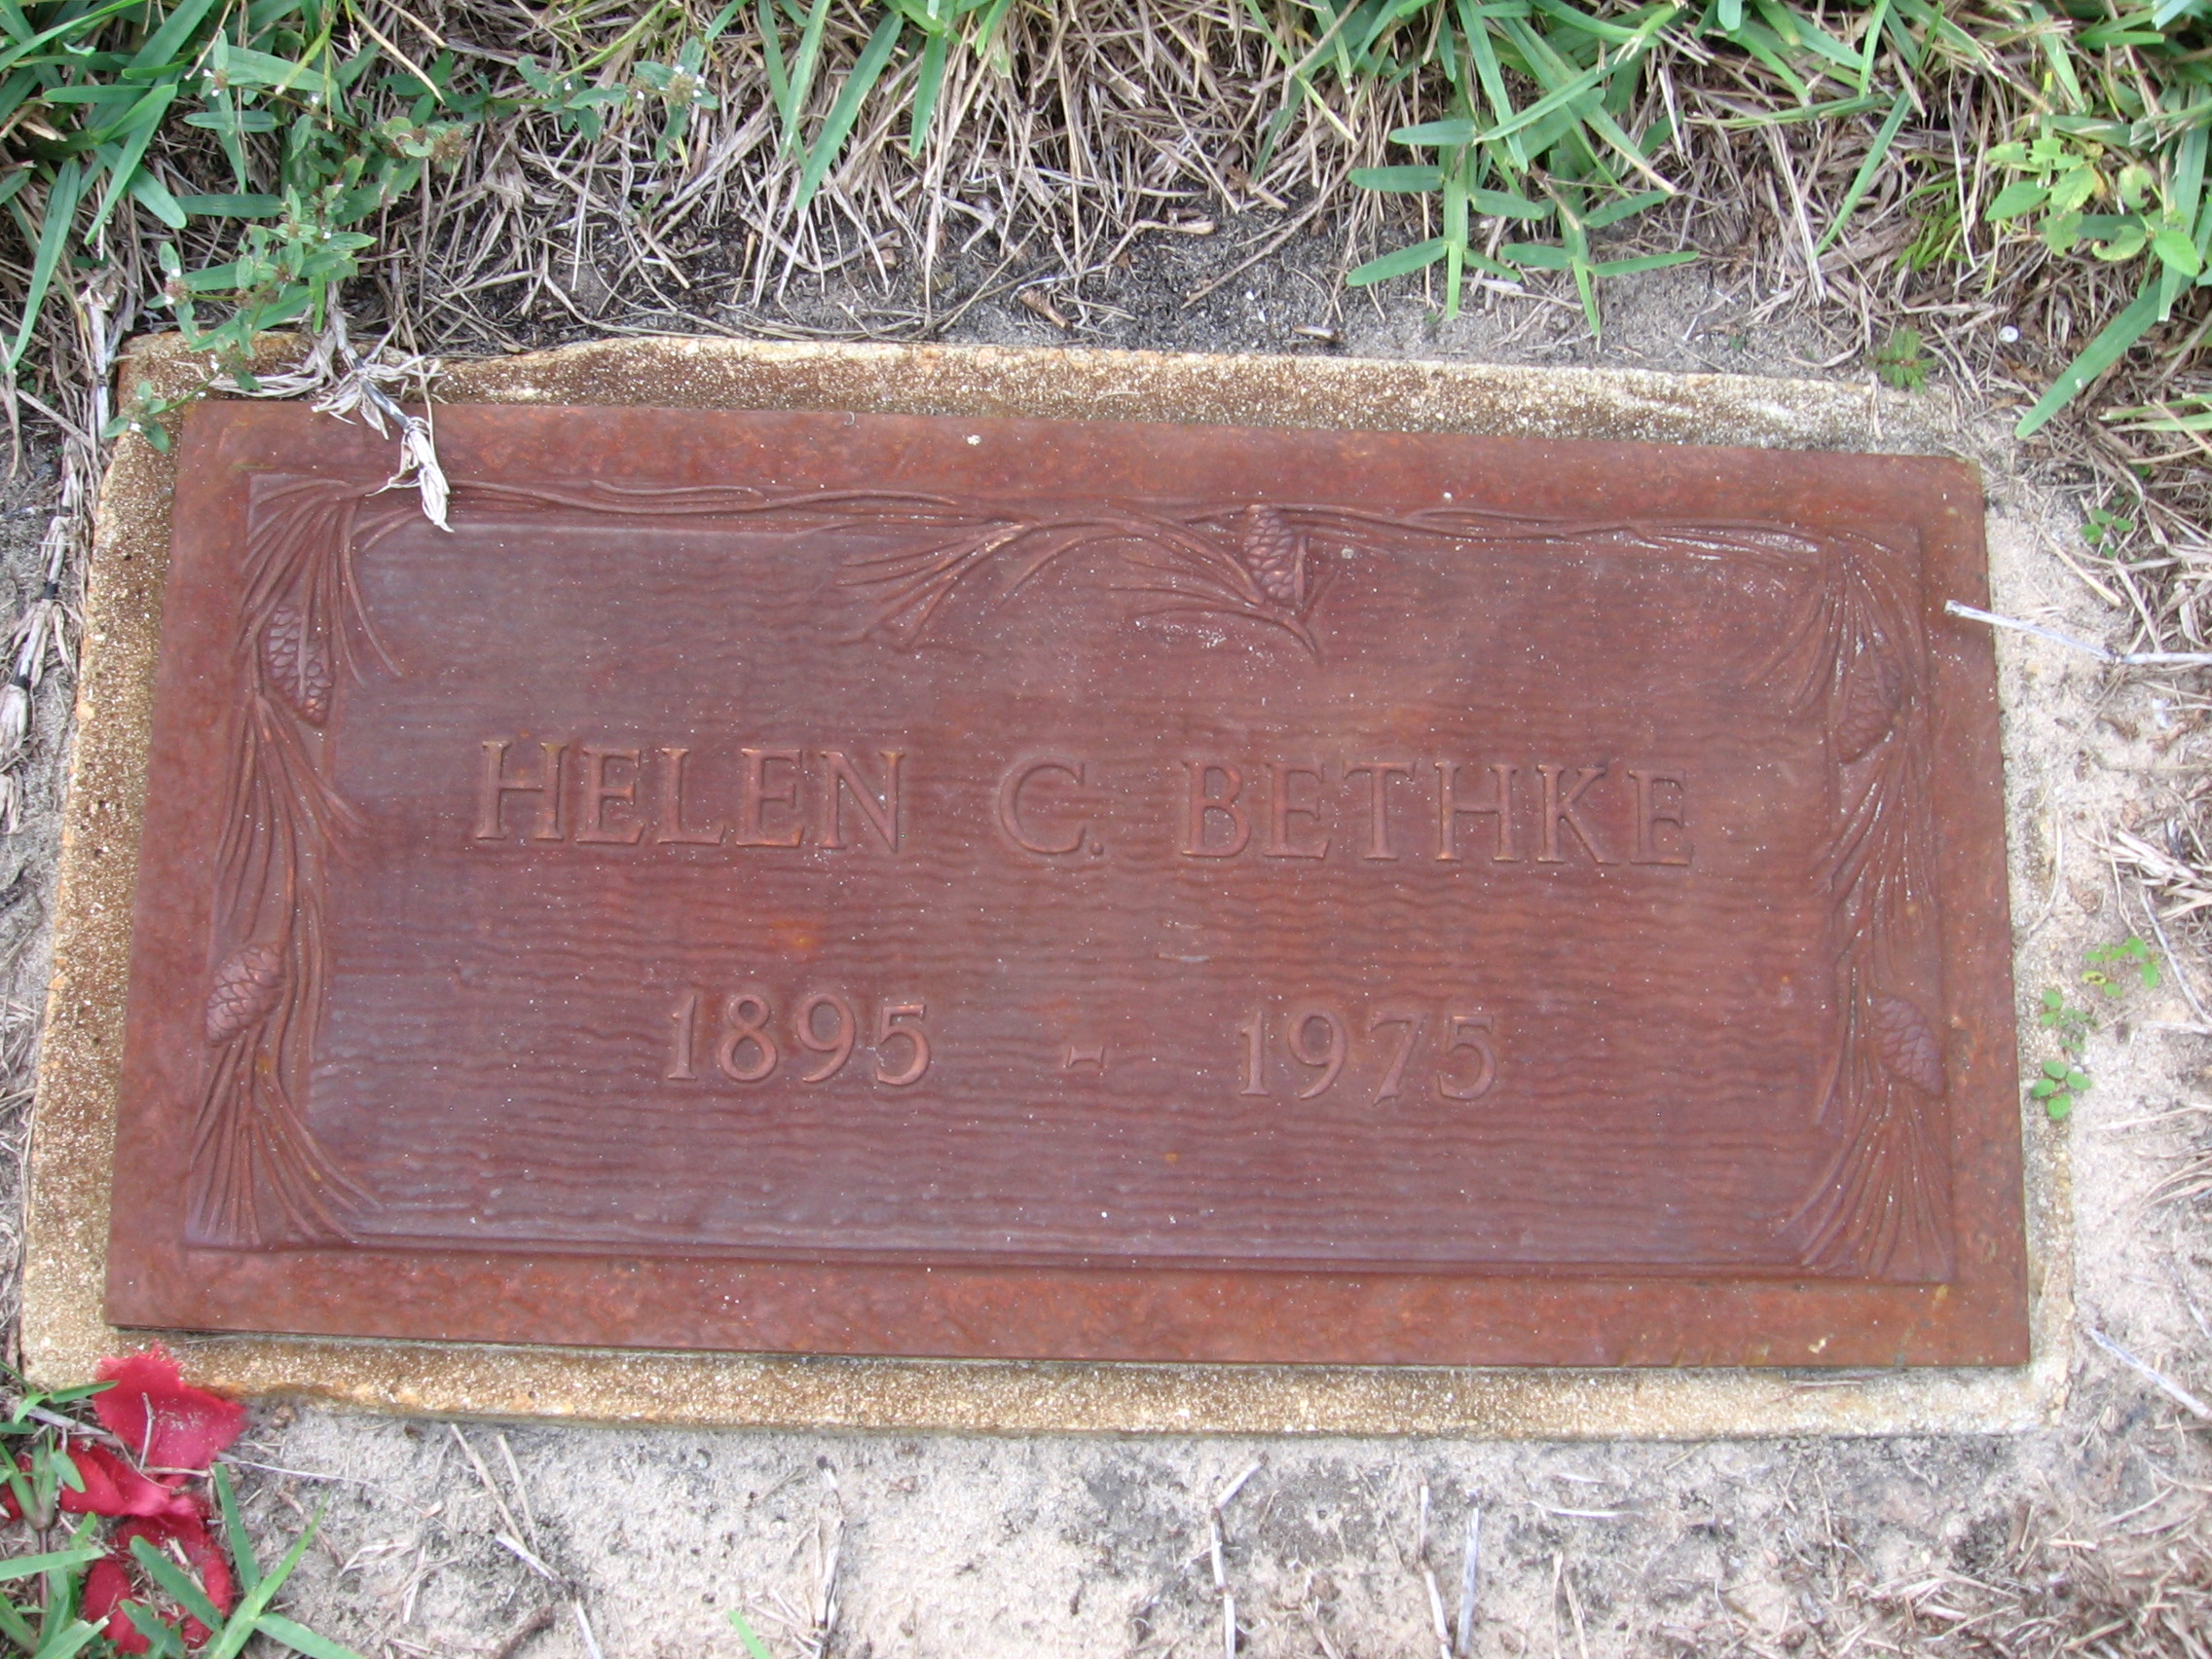 Helen C Bethke